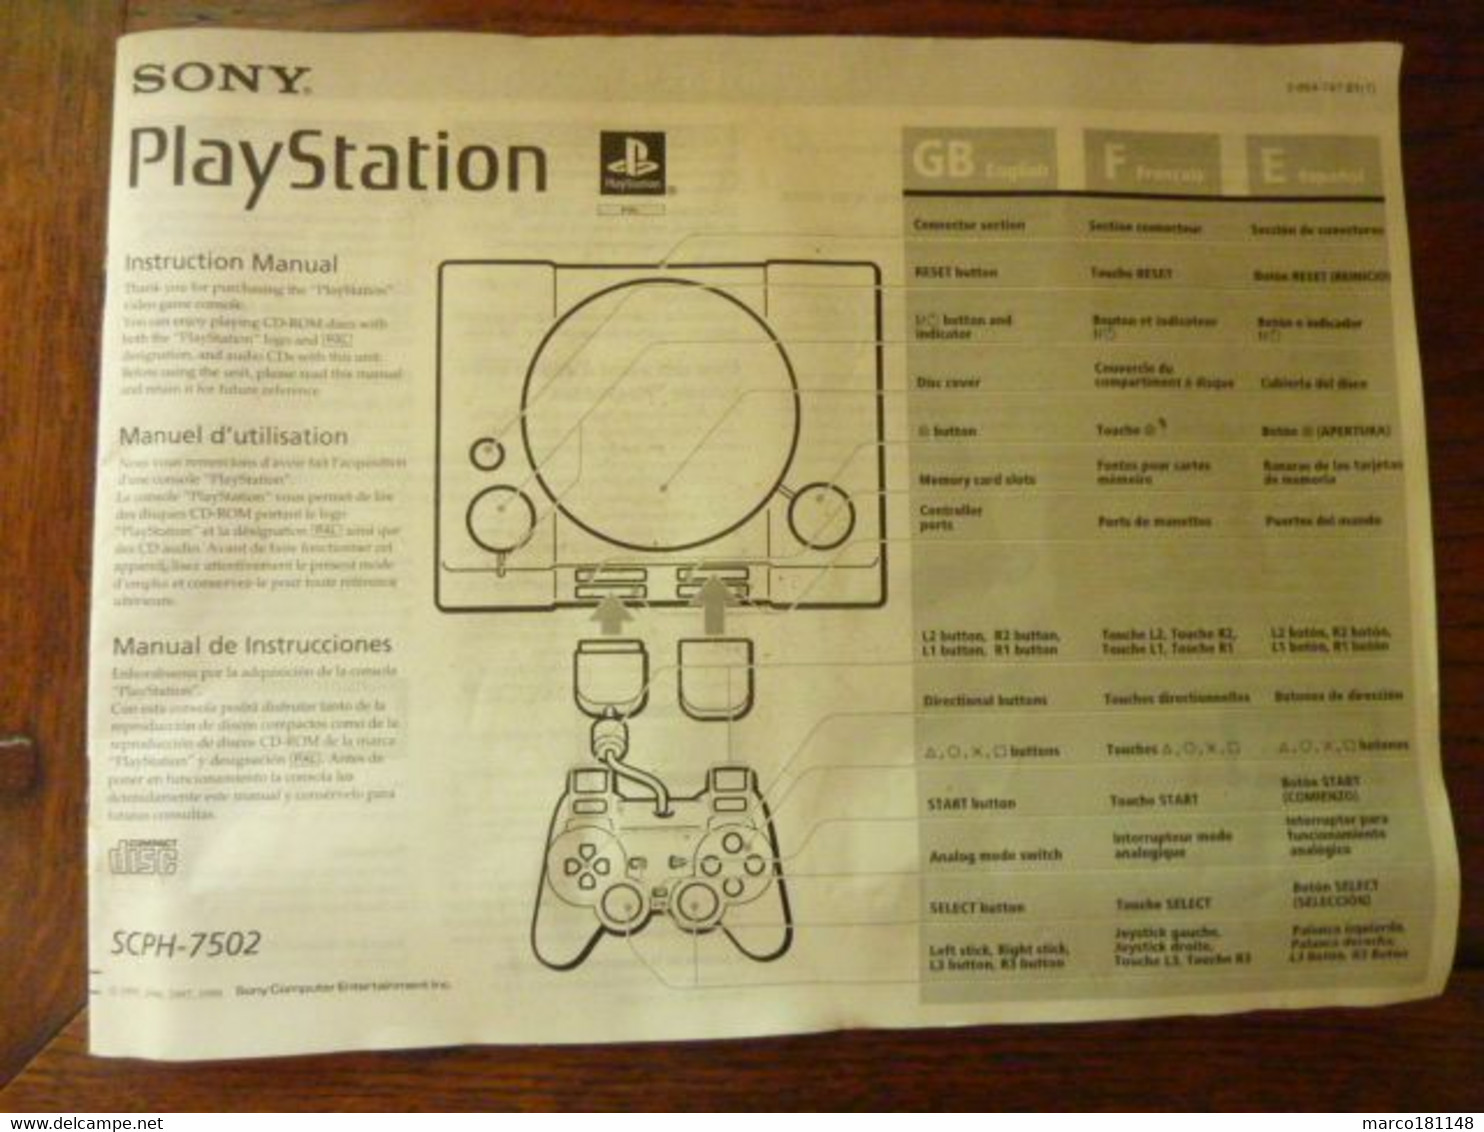 PLAYSTATION - Sony -